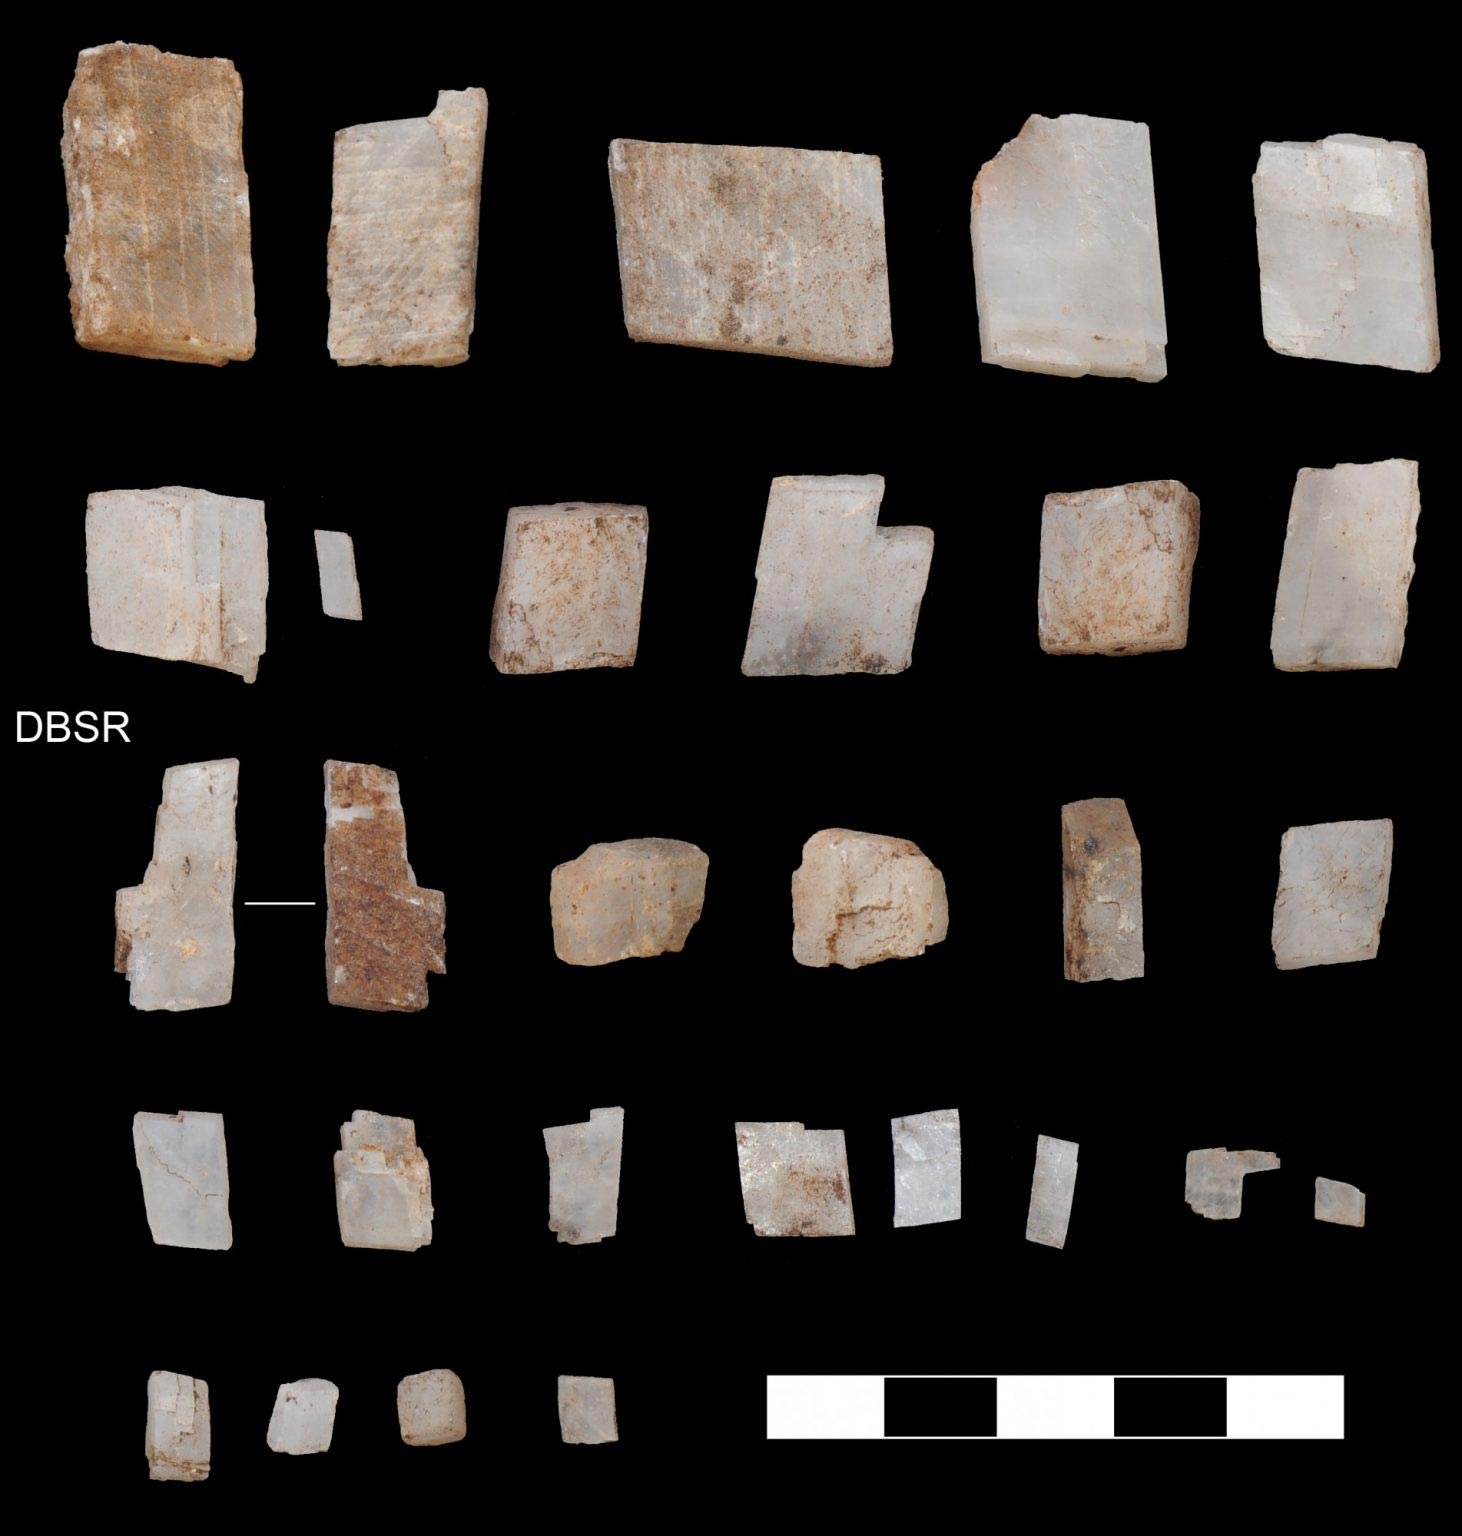 Crystals reveal early humans in the Kalahari 105,000 years ago were as innovative as their coastal neighbors